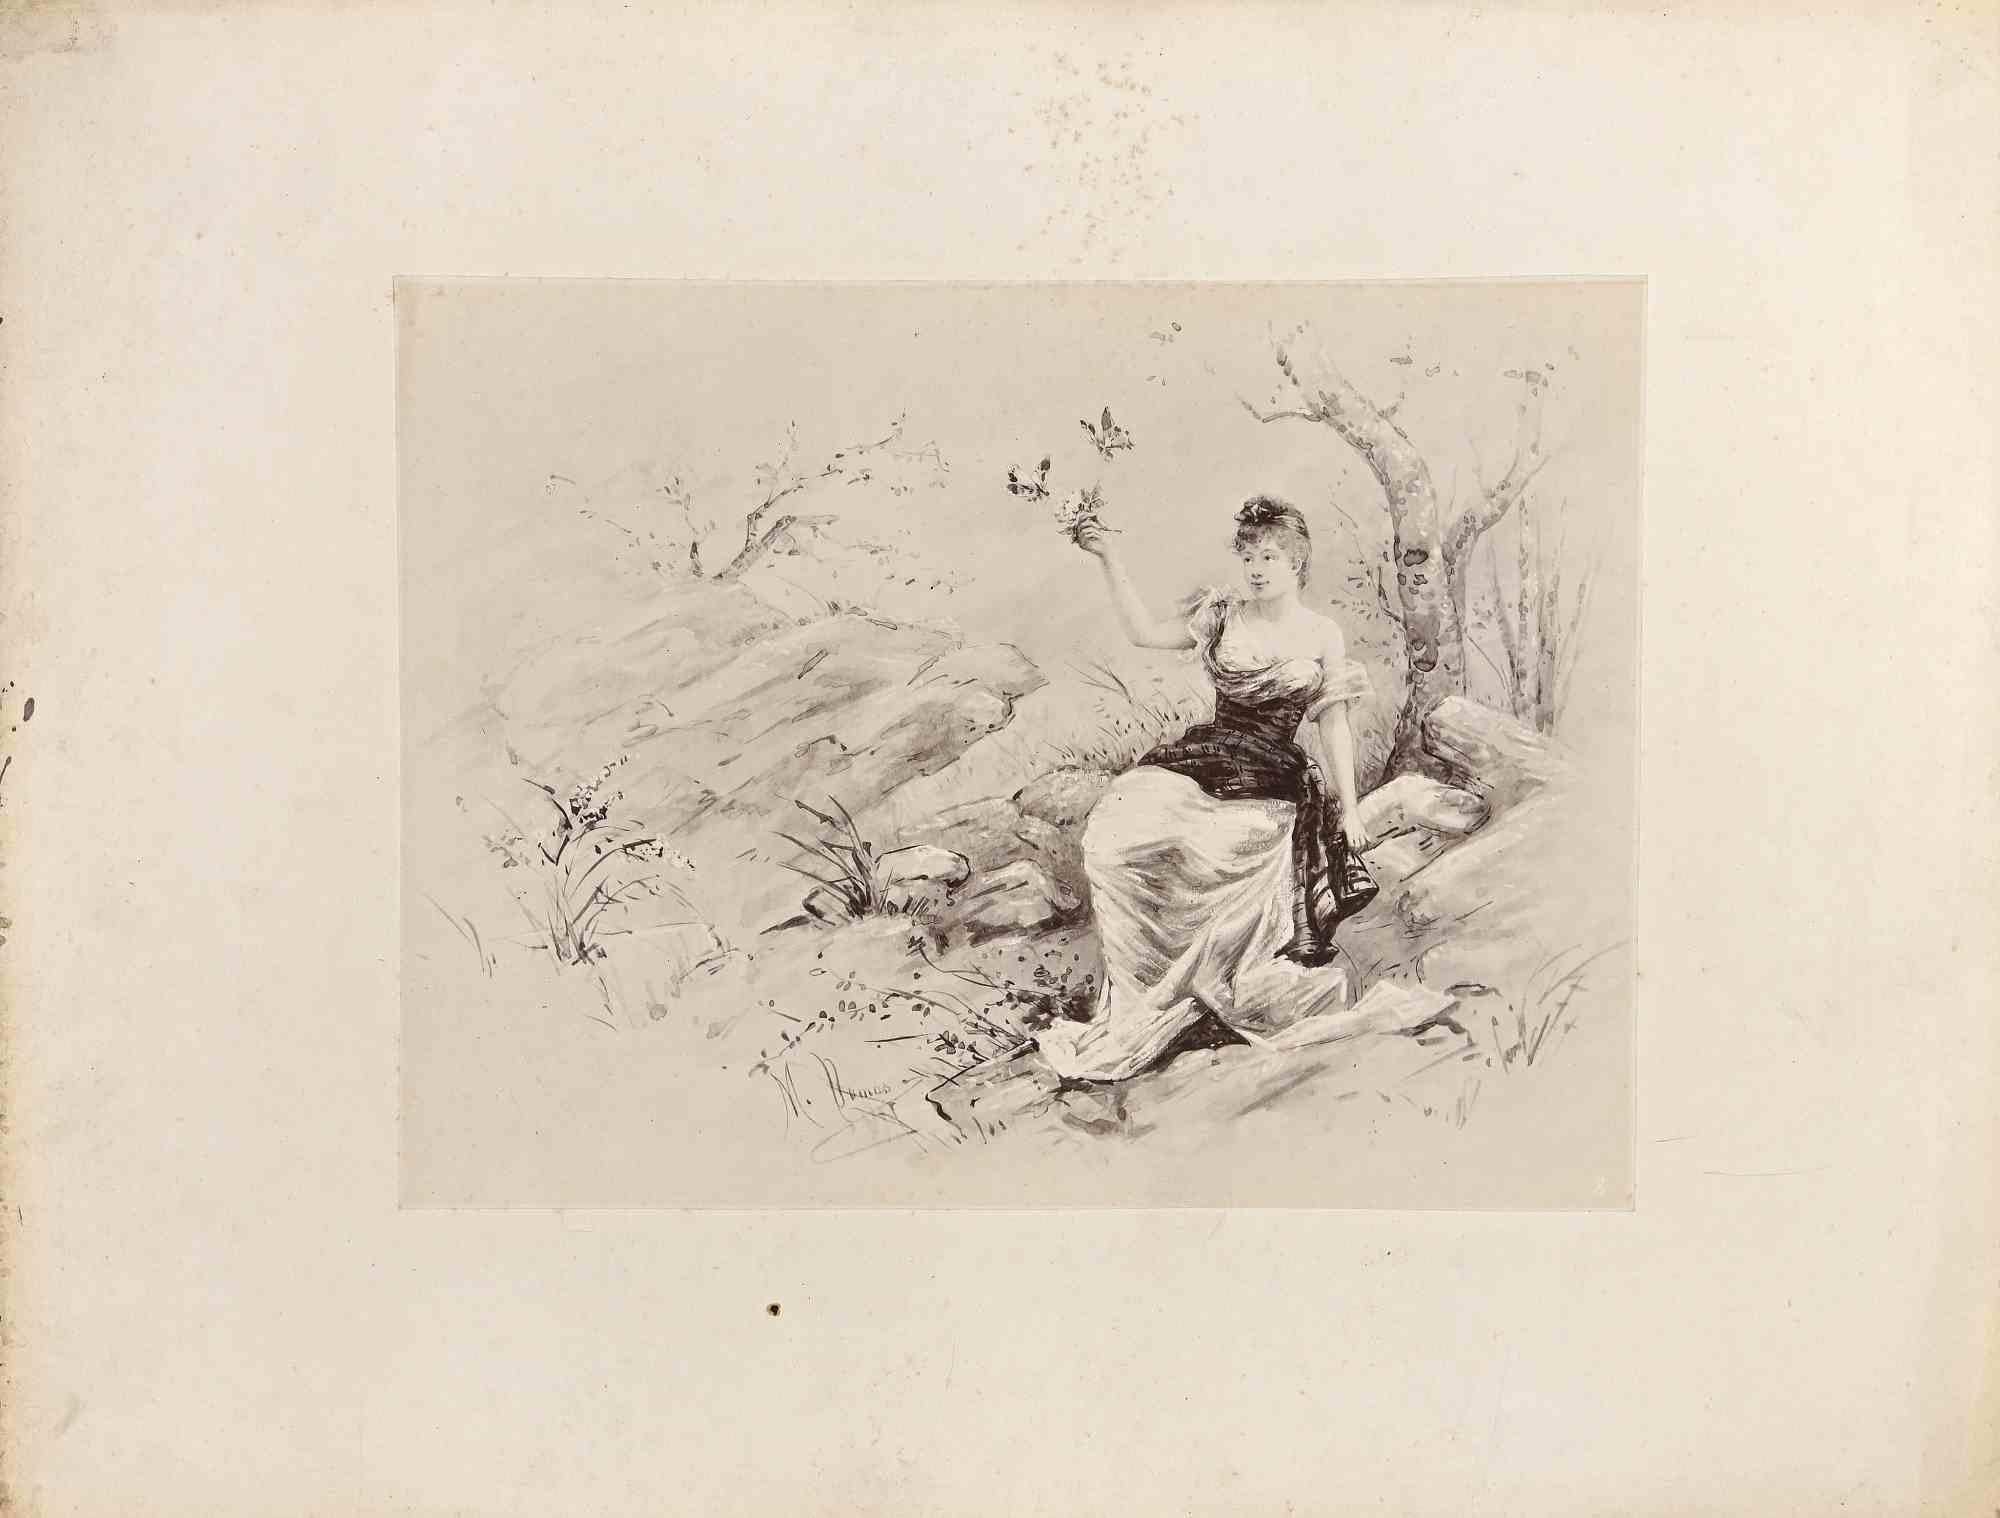 Michel Dumas Figurative Print - Feeding the Birds - Vintage Photolithograph after M. Dumas - Late 19th Century